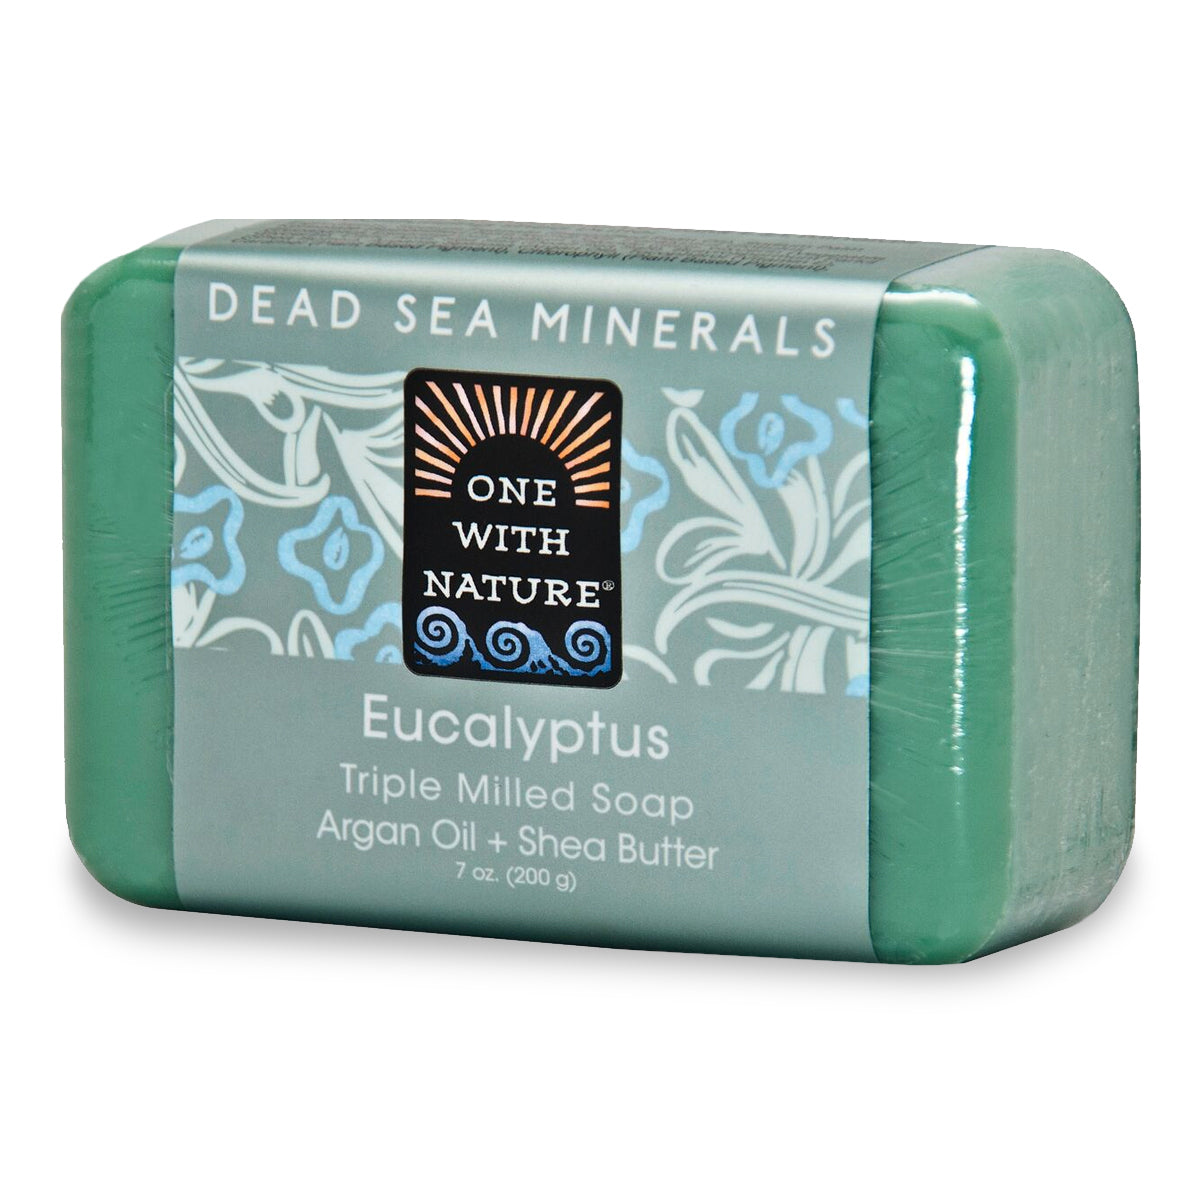 Primary image of Dead Sea Mineral Soap - Eucalyptus